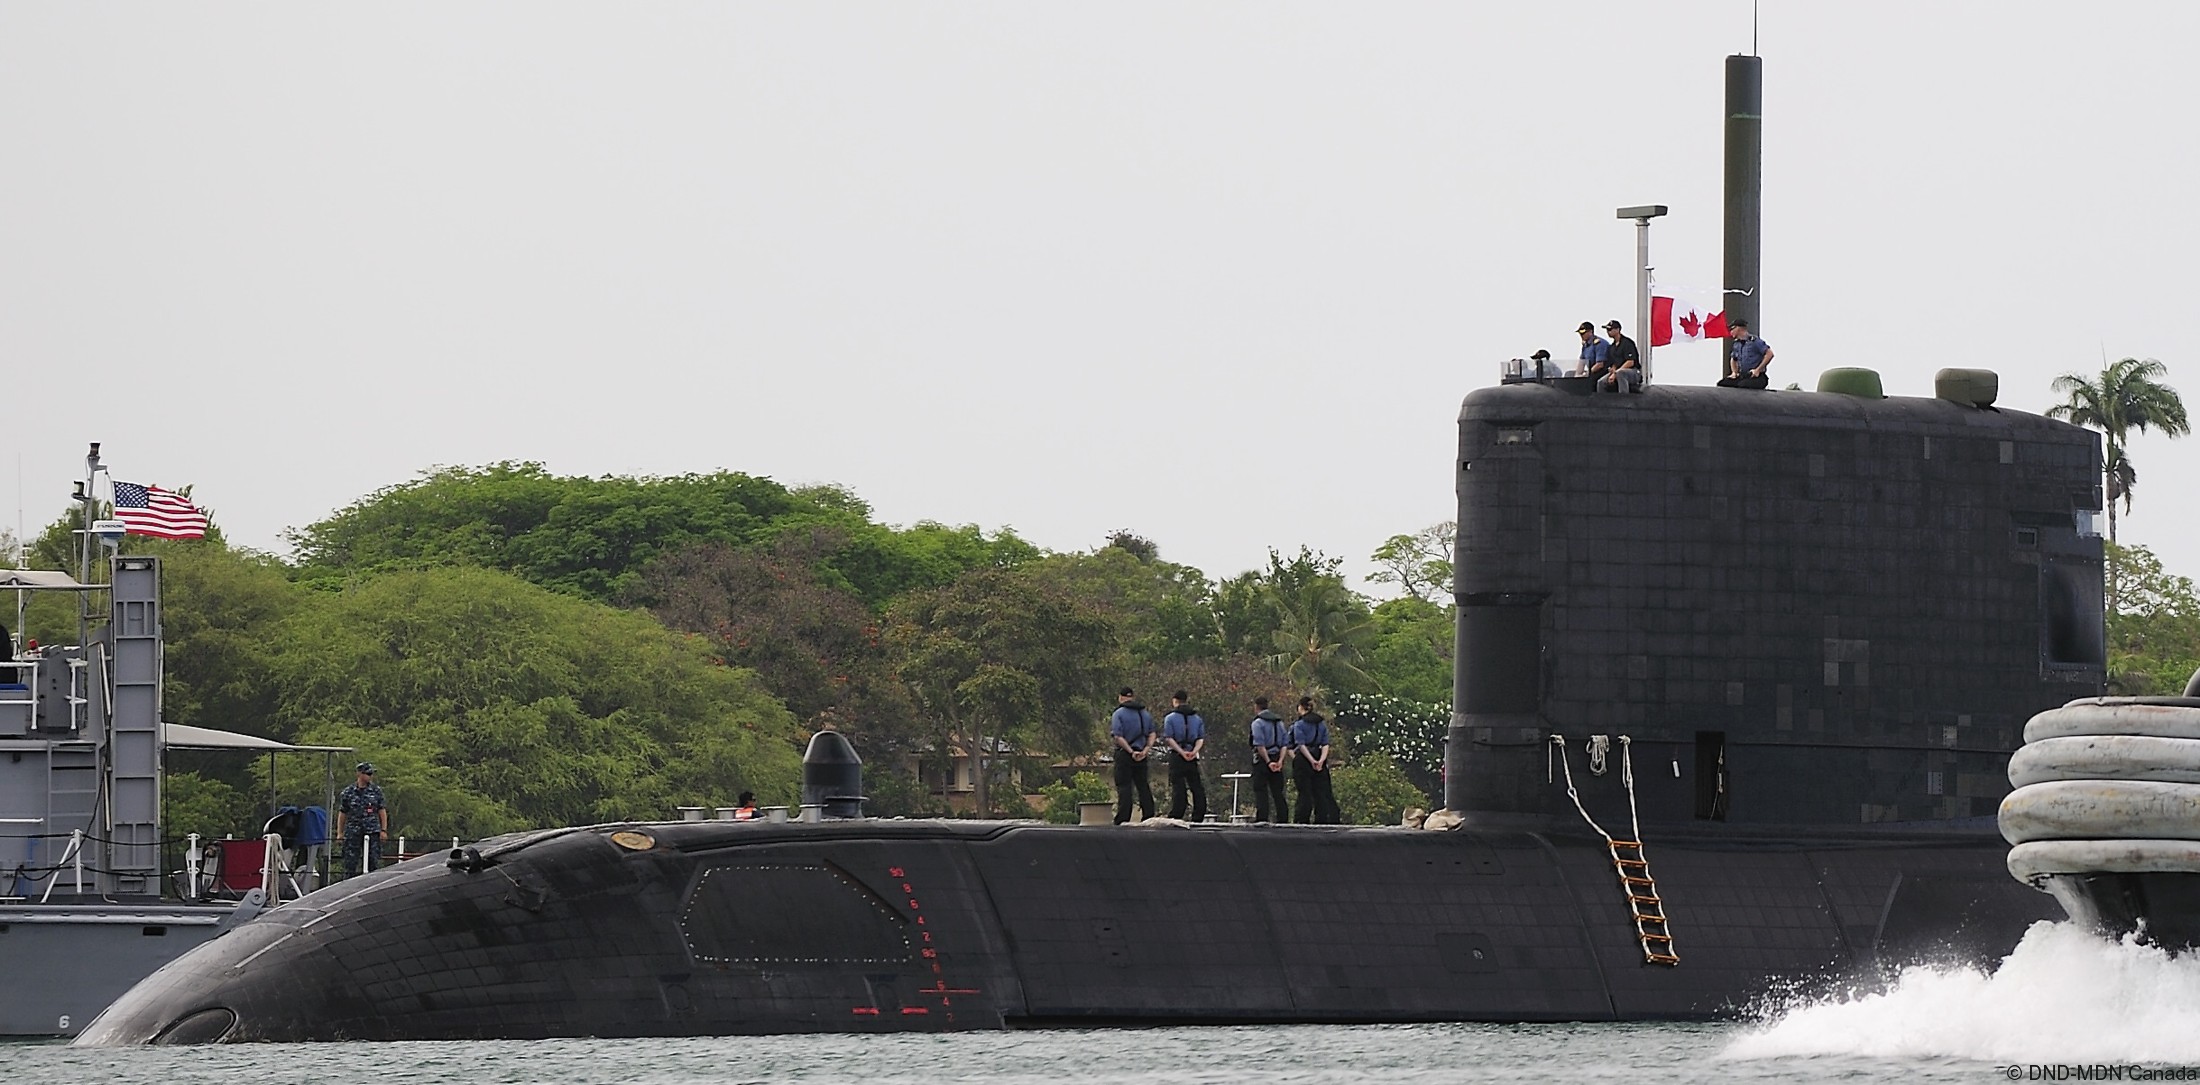 ssk-876 hmcs victoria upholder class attack submarine hunter killer ncsm royal canadian navy 39